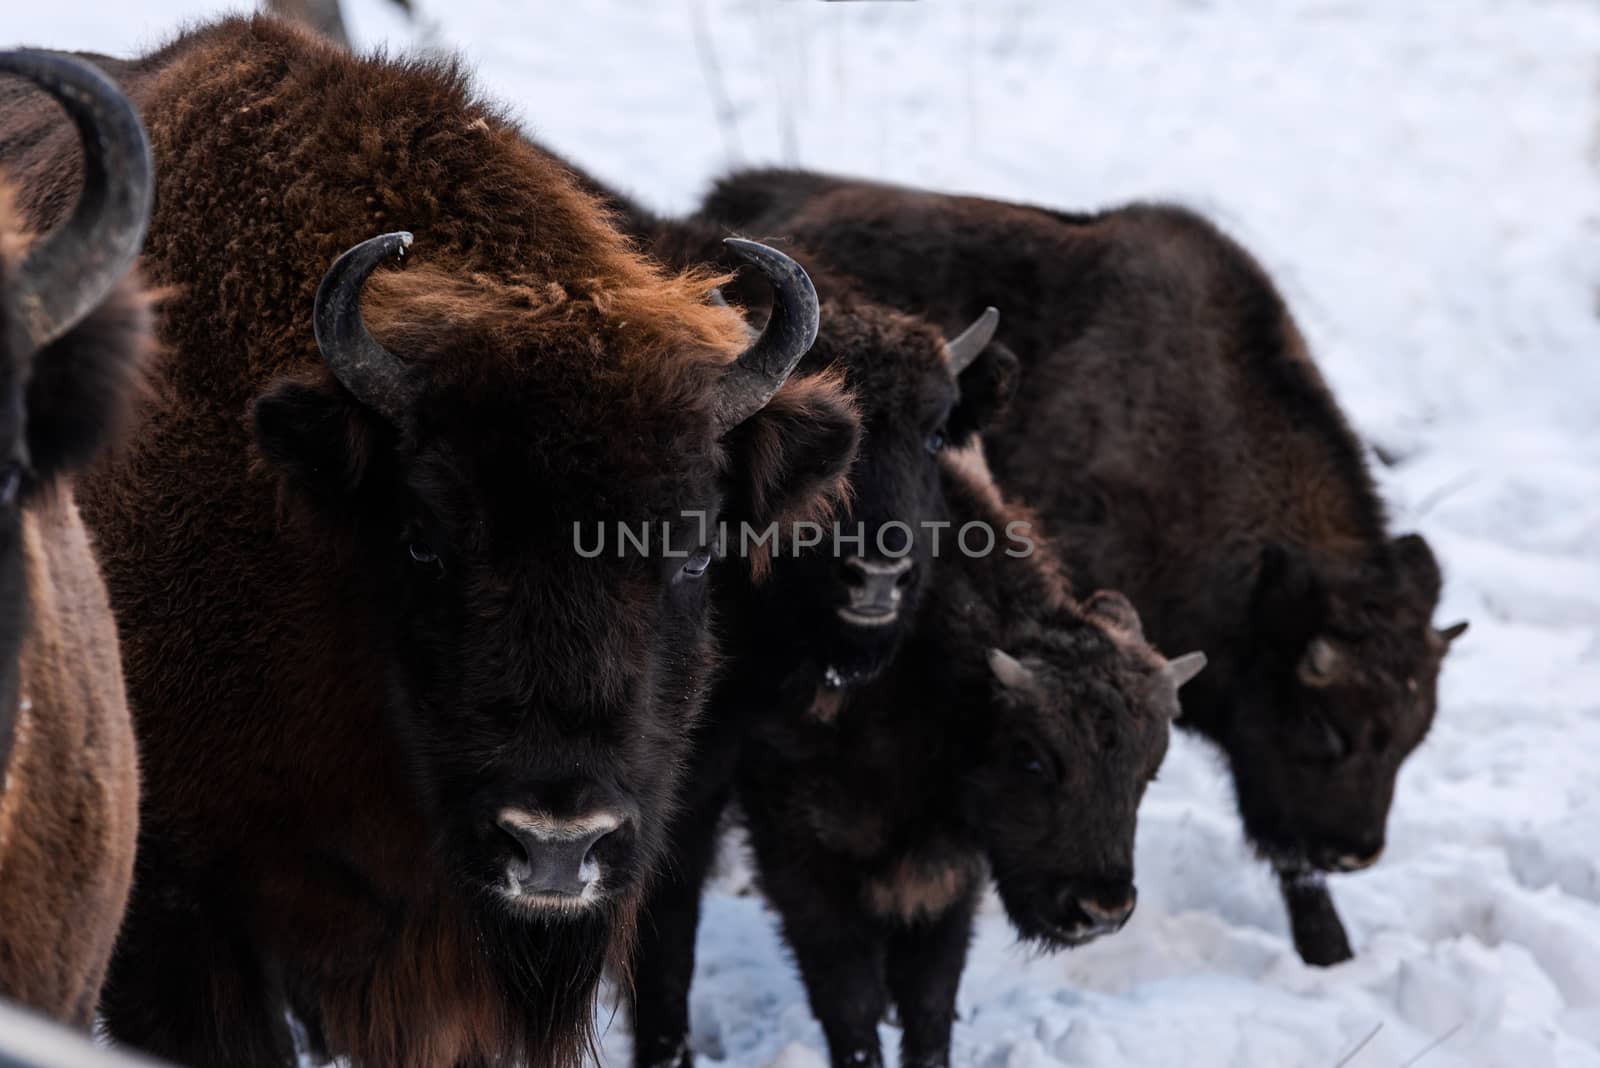 European bison (Bison bonasus) Family Portrait Outdoor at Winter by merc67